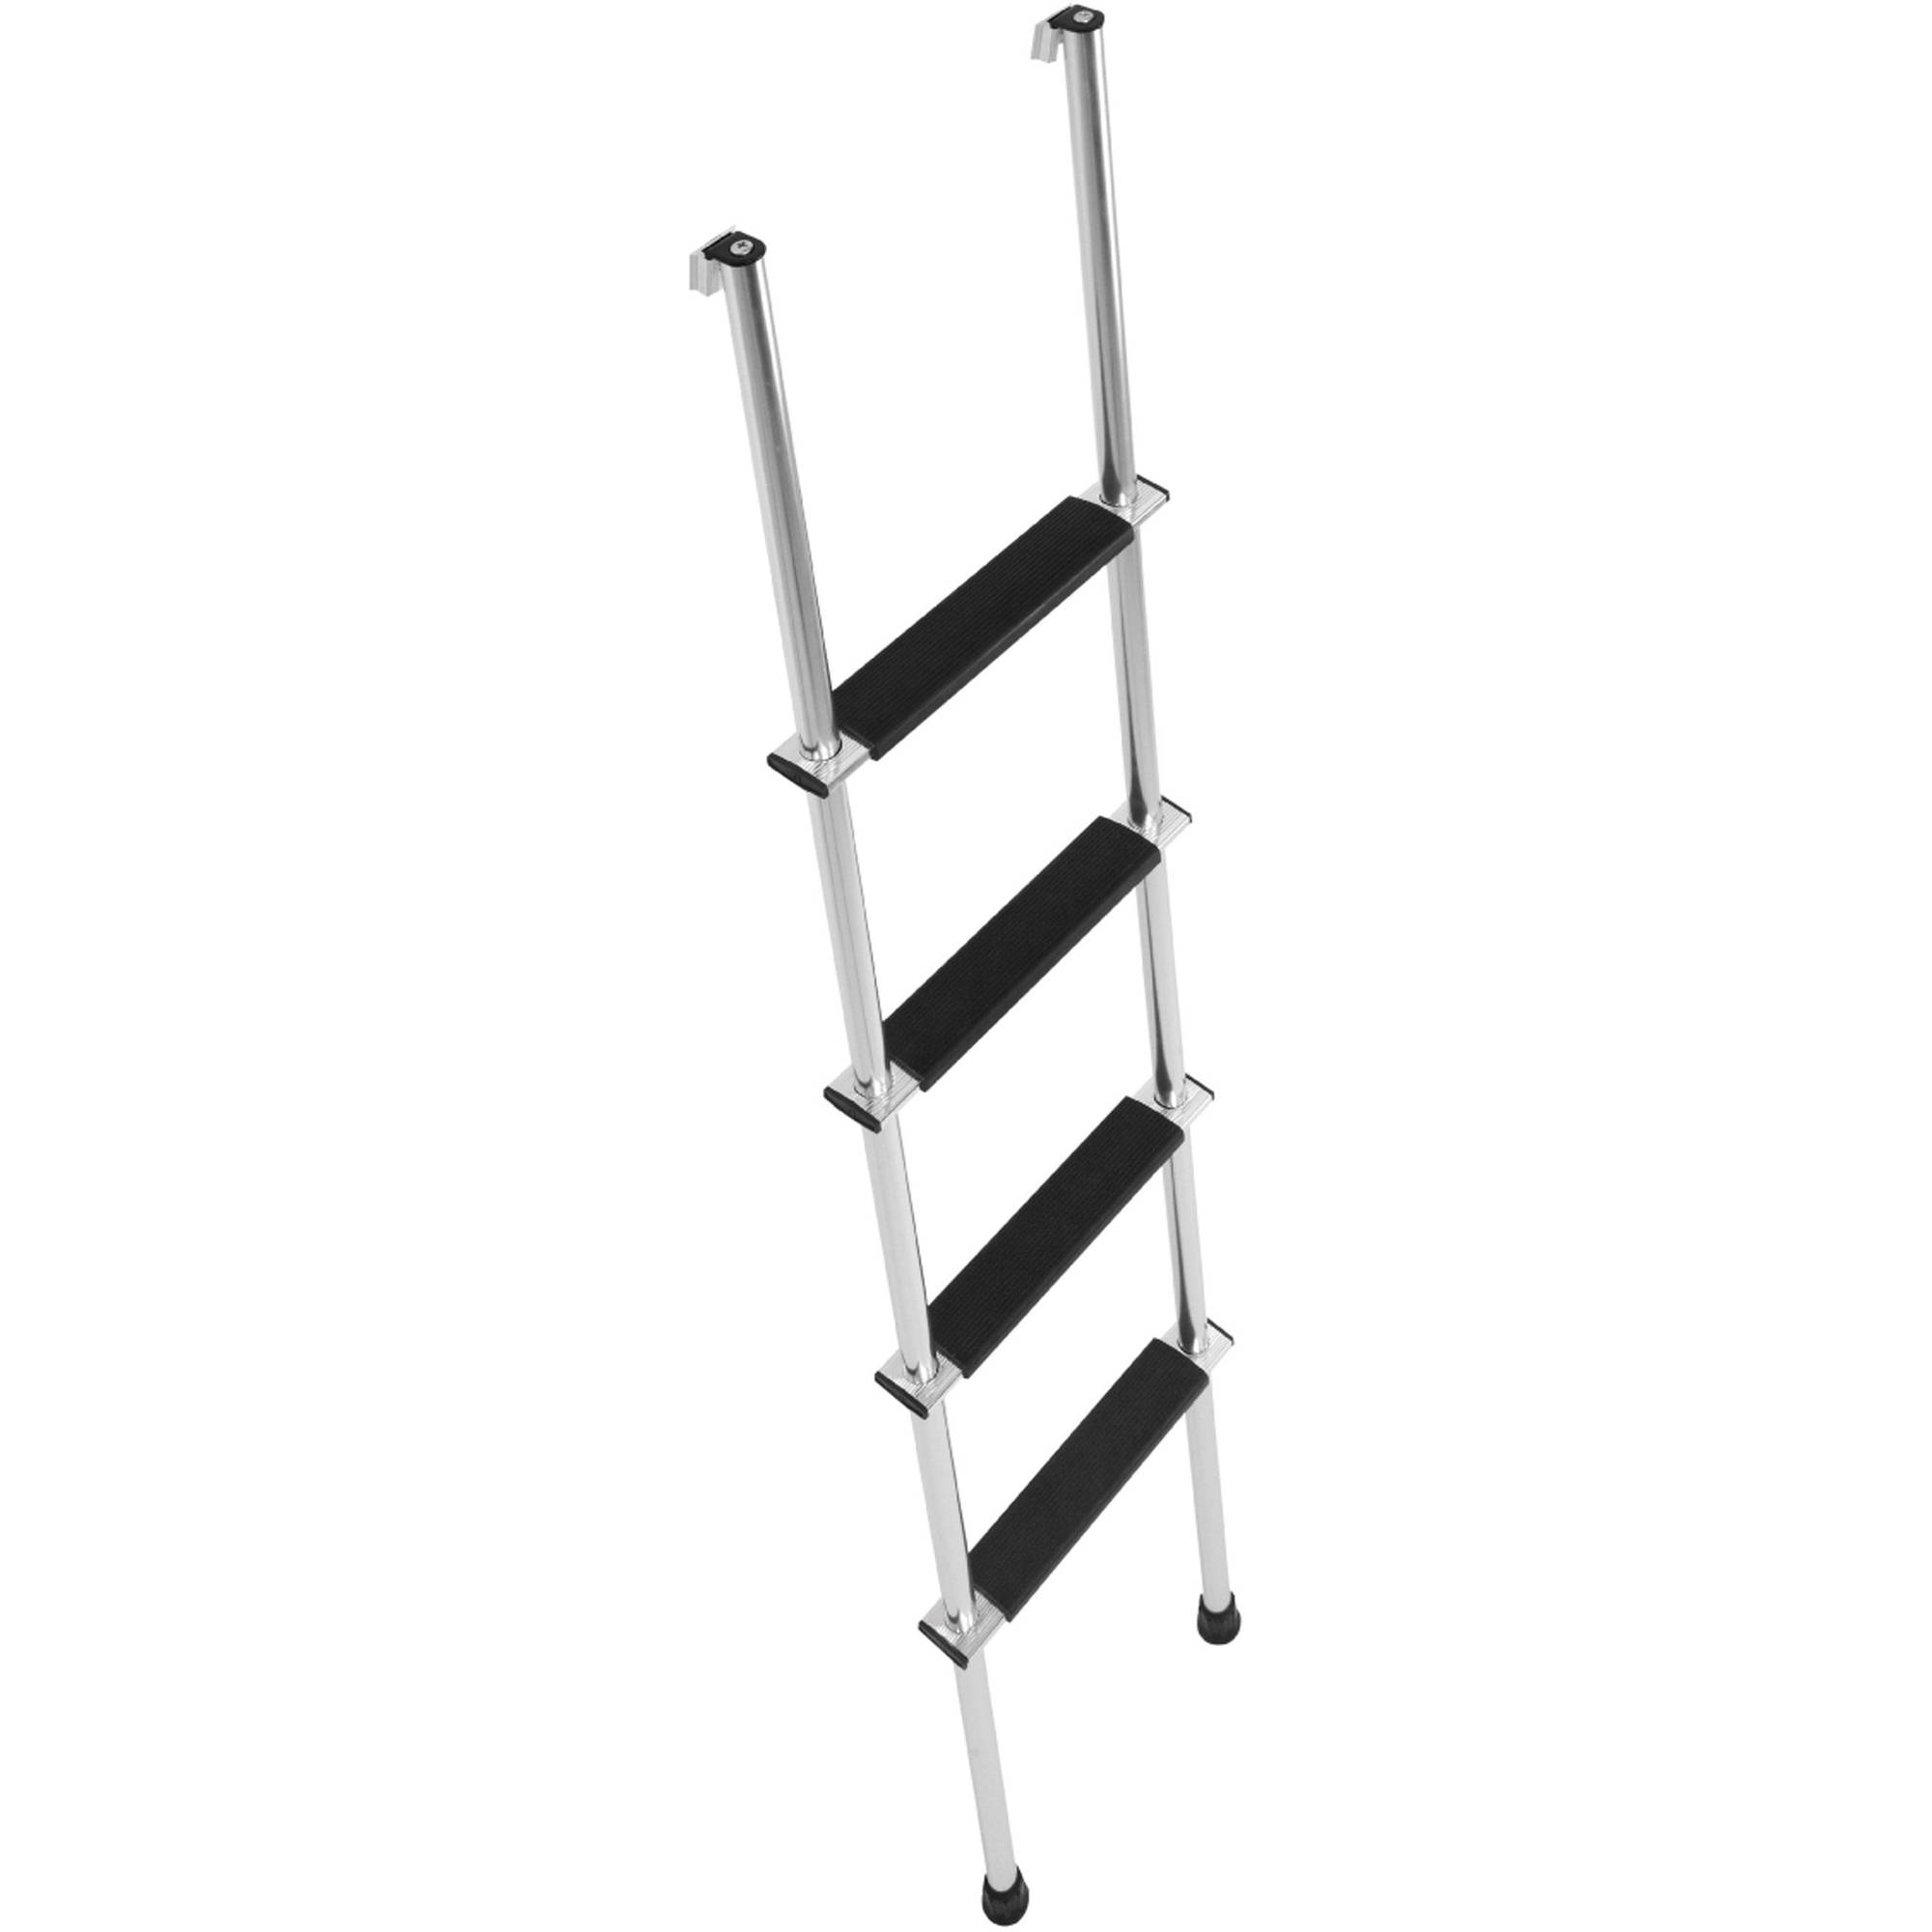 Stromberg Carlson Bunk Ladder - Walmart.com